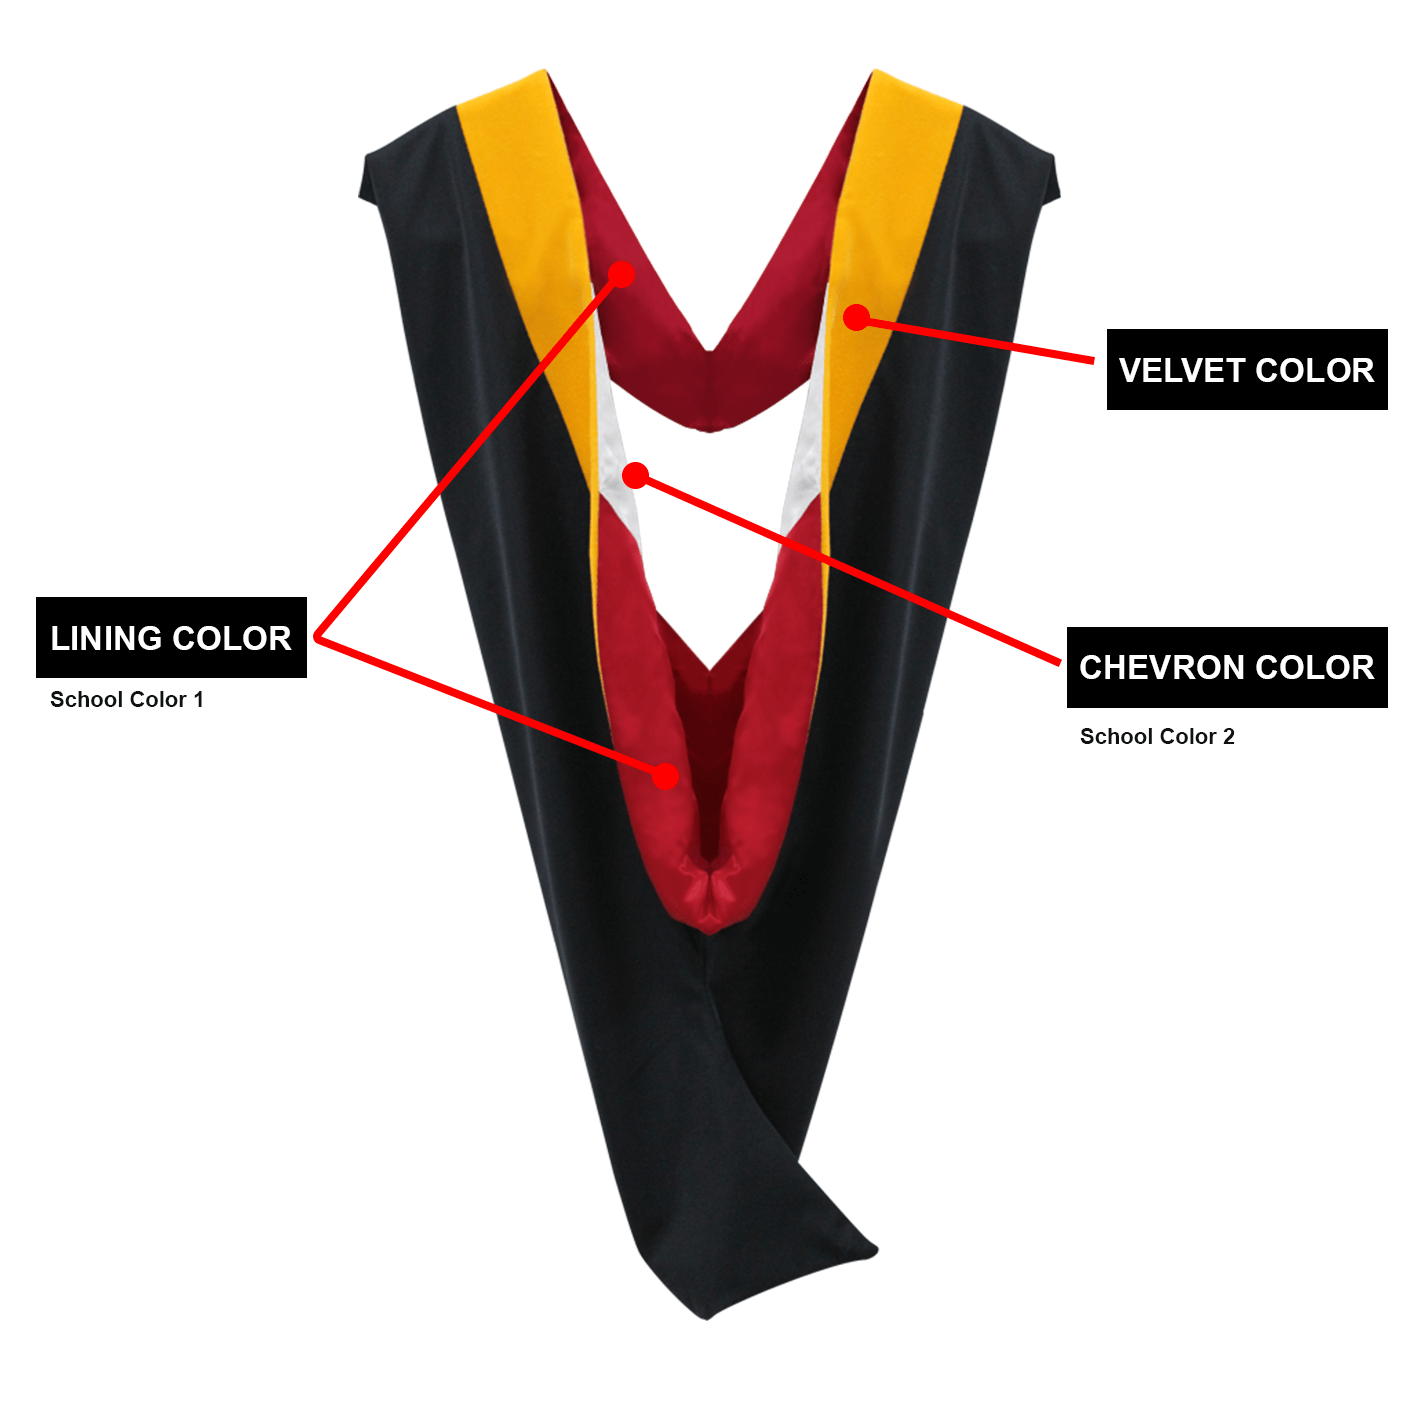 Deluxe Masters Graduation Hood - Academic Hood - Graduation Cap and Gown